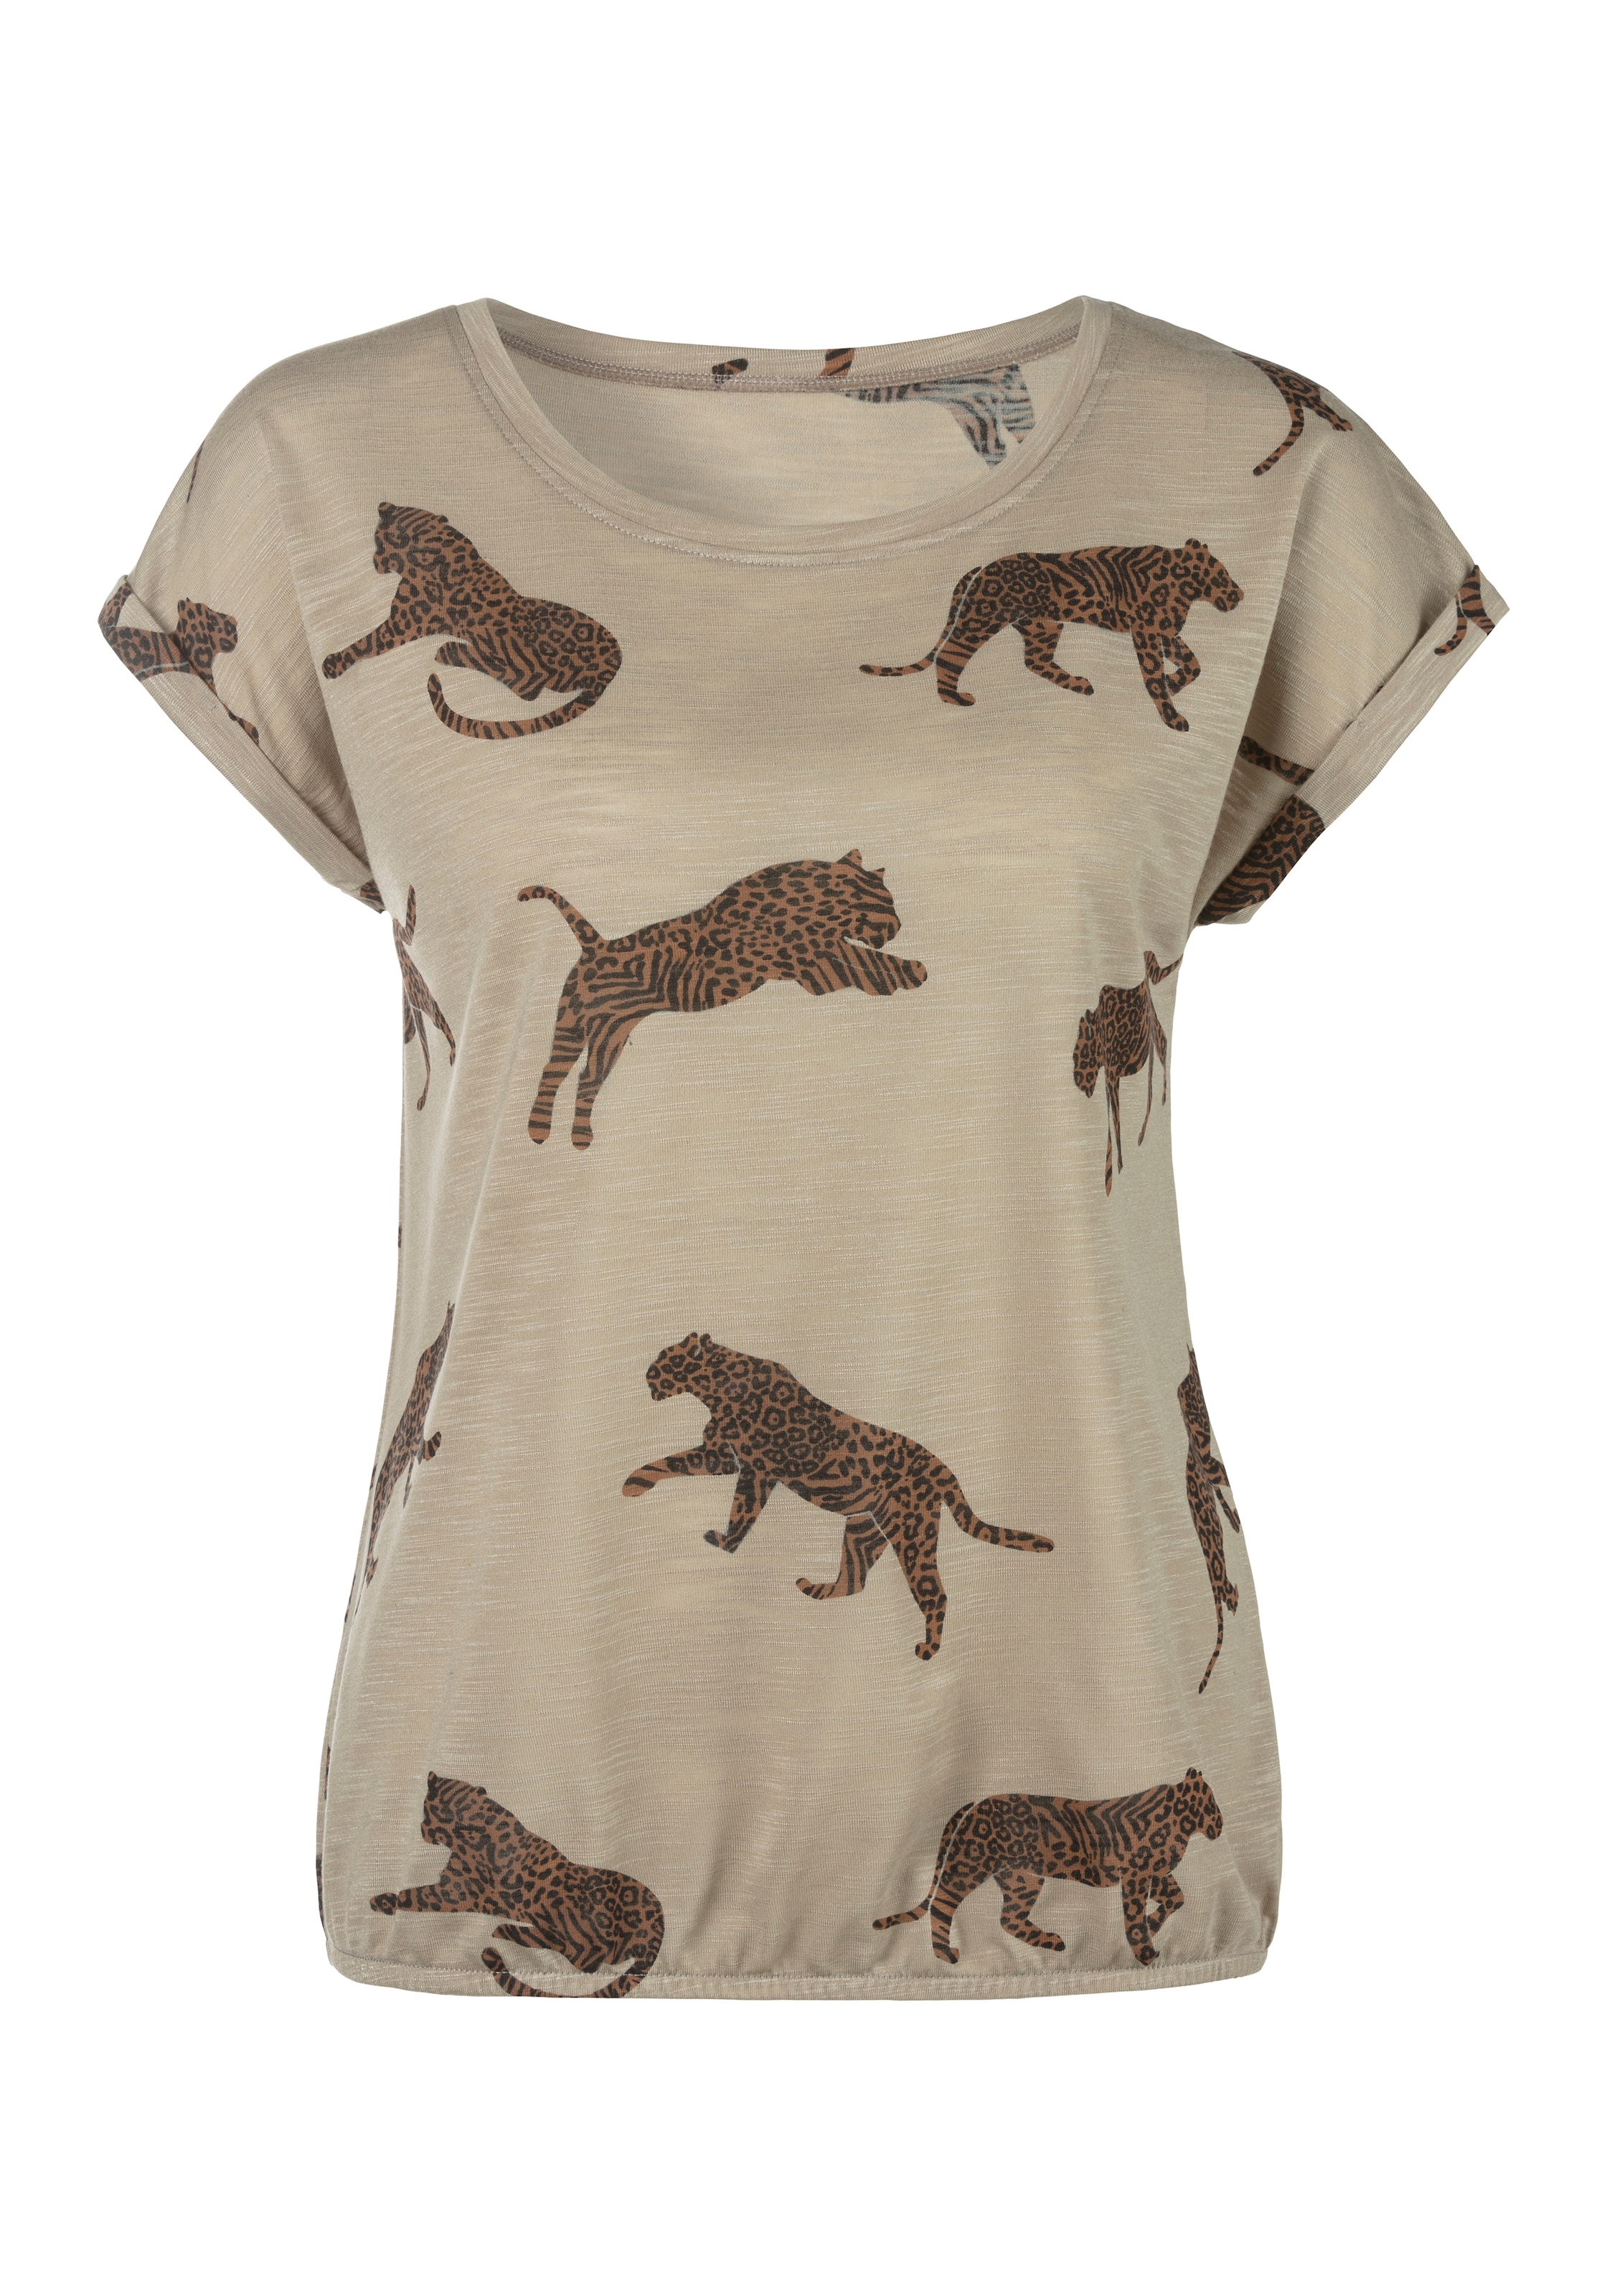 lockere online Passform, mit bei casual-chic Kurzarmshirt, Damen T-Shirt, Leoparden-Motiv, LASCANA